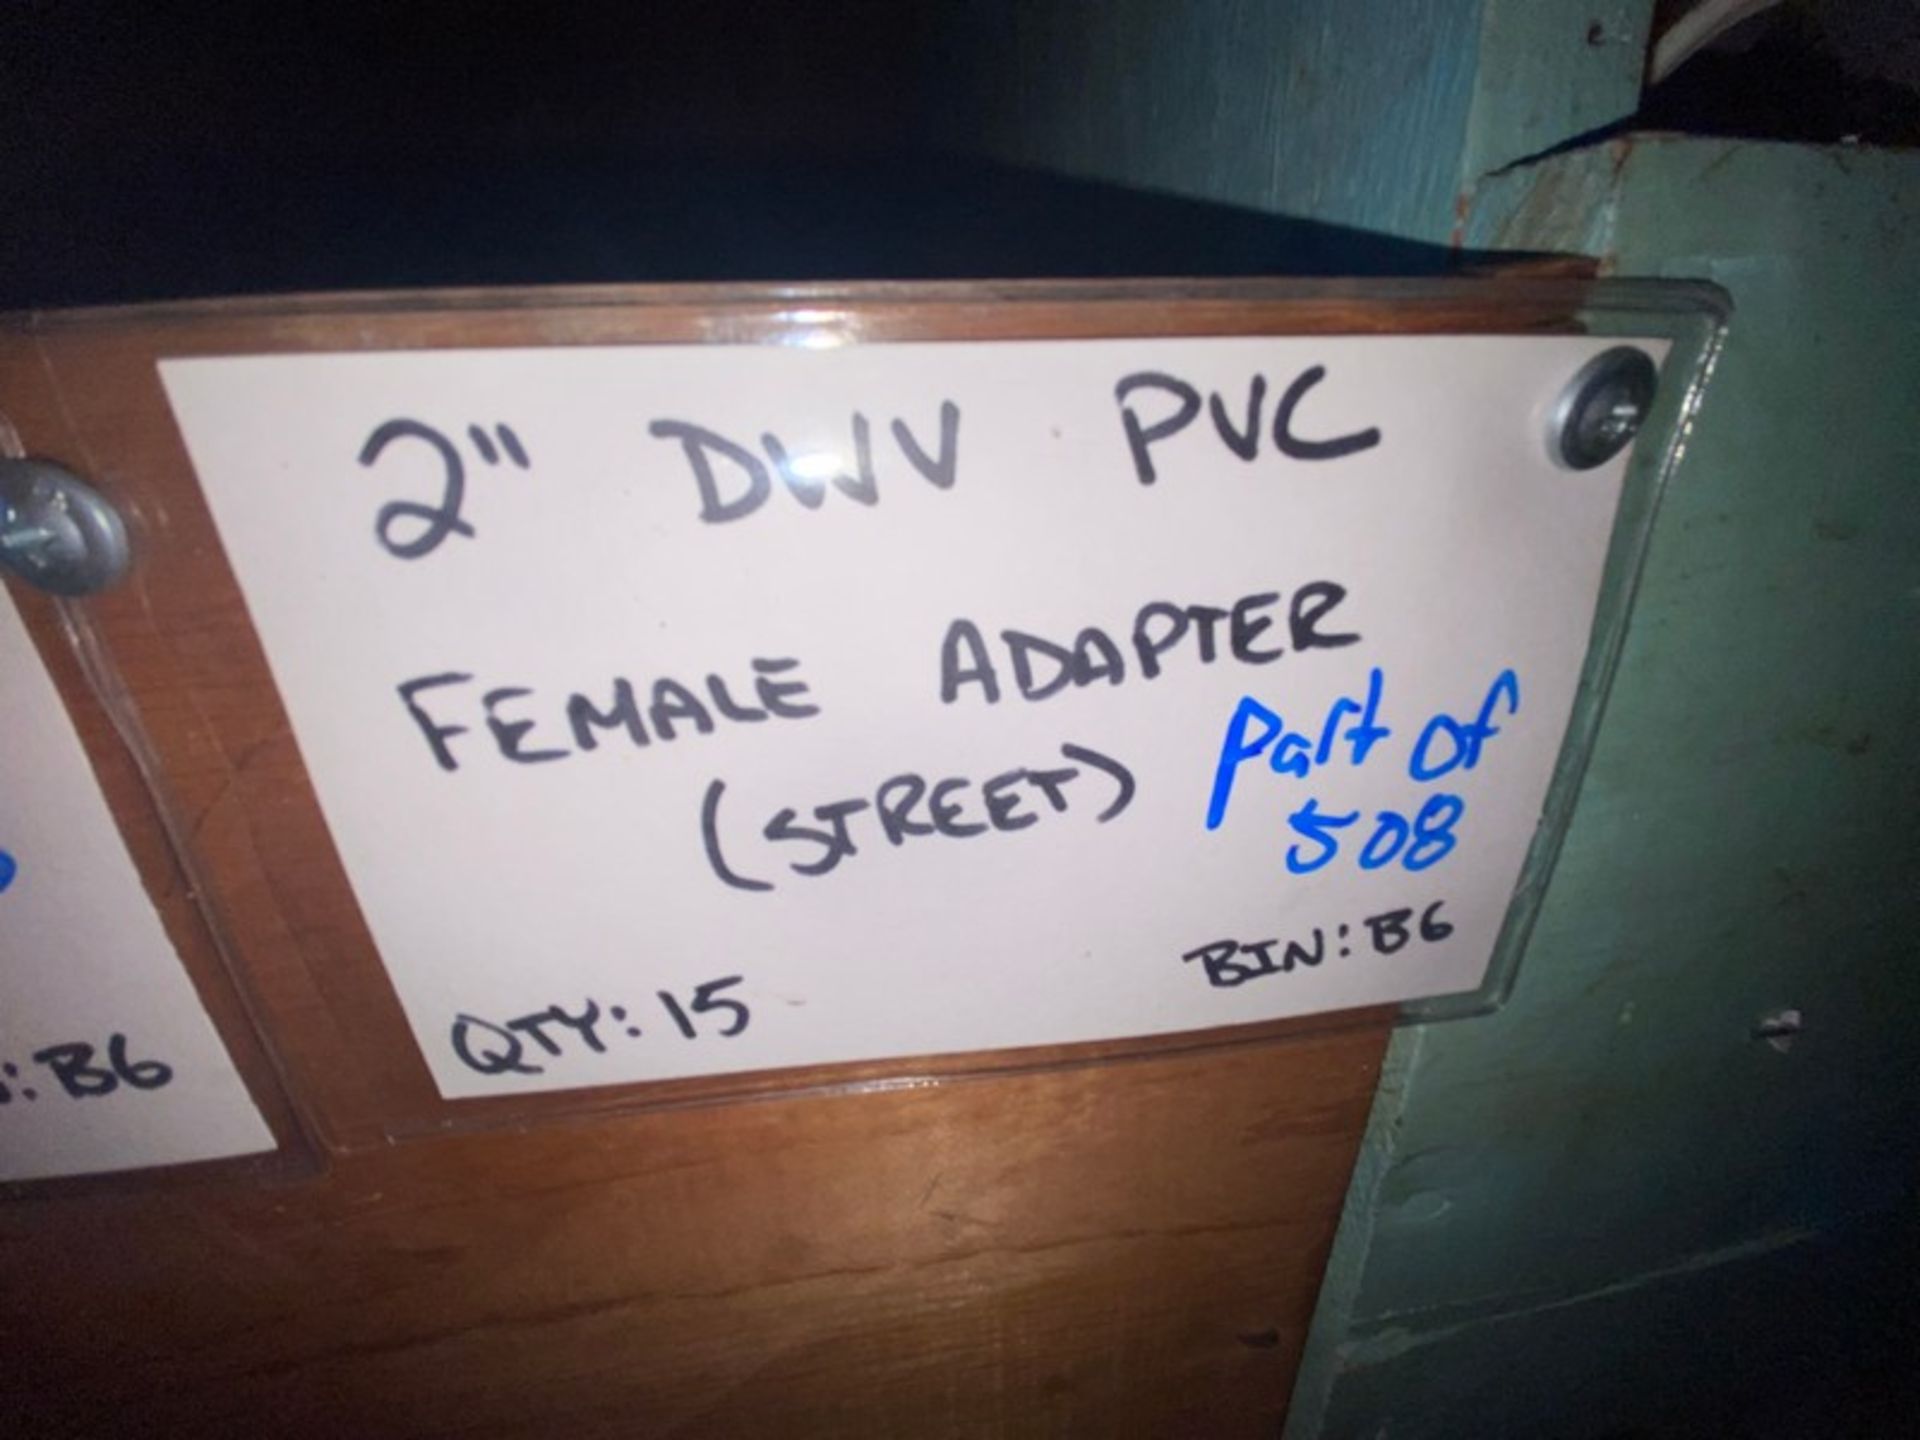 (6) 2” DWV PVC Female Adapter (HUB) (Bin:B6) (Trailer #5)(LOCATED IN MONROEVILLE, PA) - Image 7 of 7